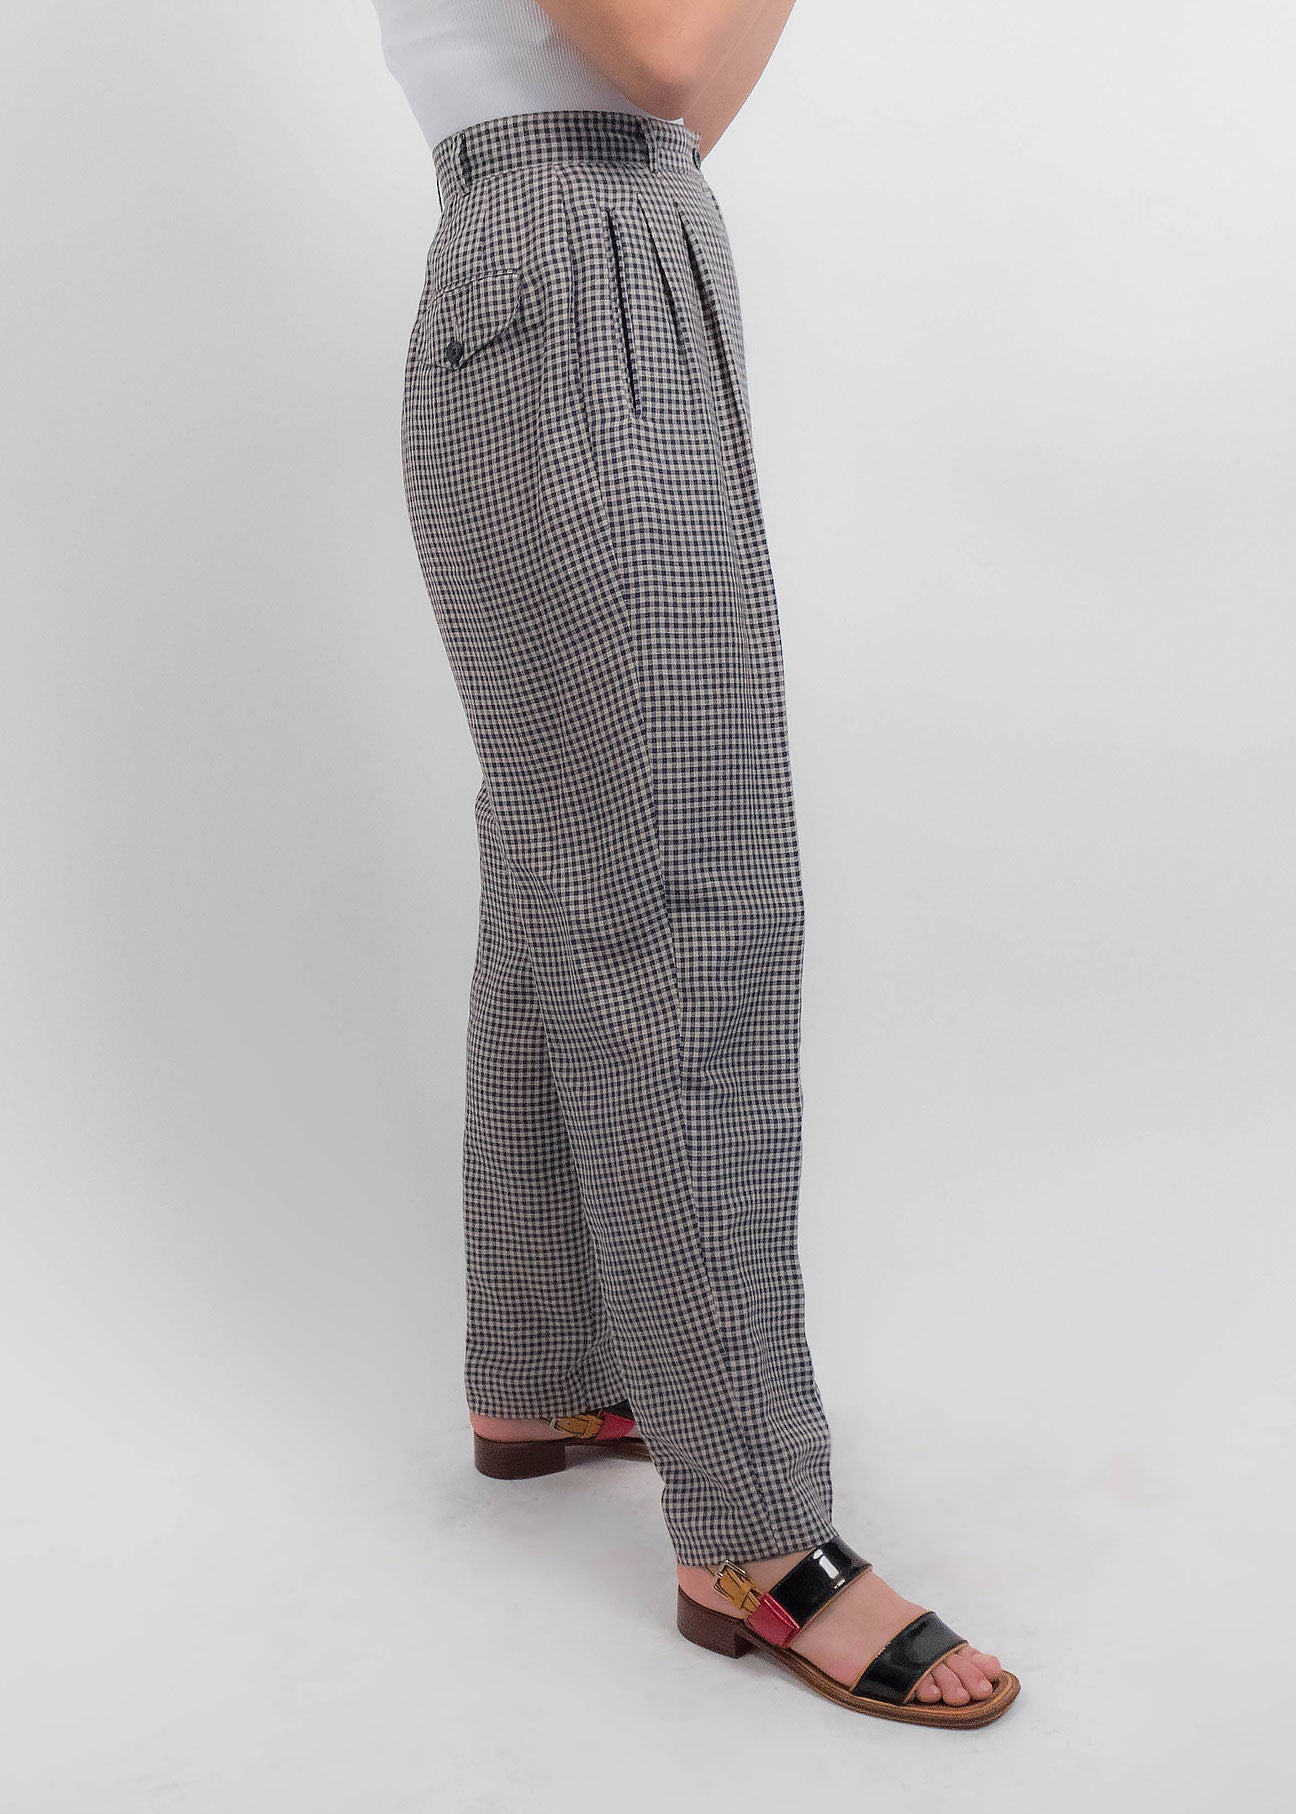 90s Gingham Linen Pants